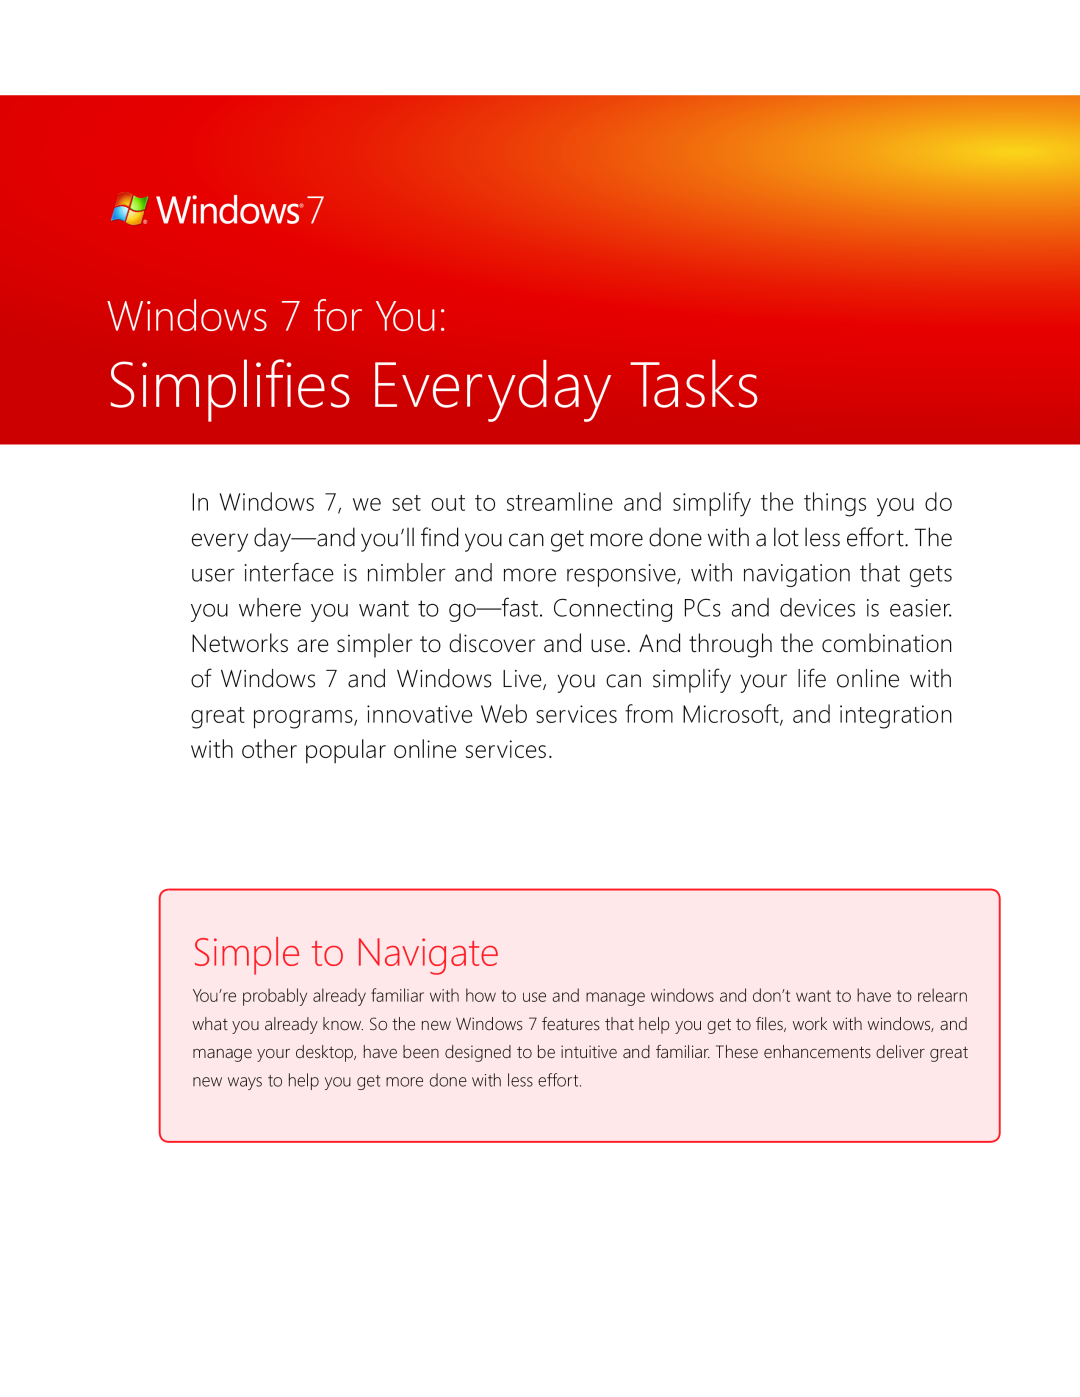 Microsoft GFC02021, GLC00182, GLC01878, GLC00184, GFC00941 Simplifi es Everyday Tasks, Windows 7 for You, Simple to Navigate 